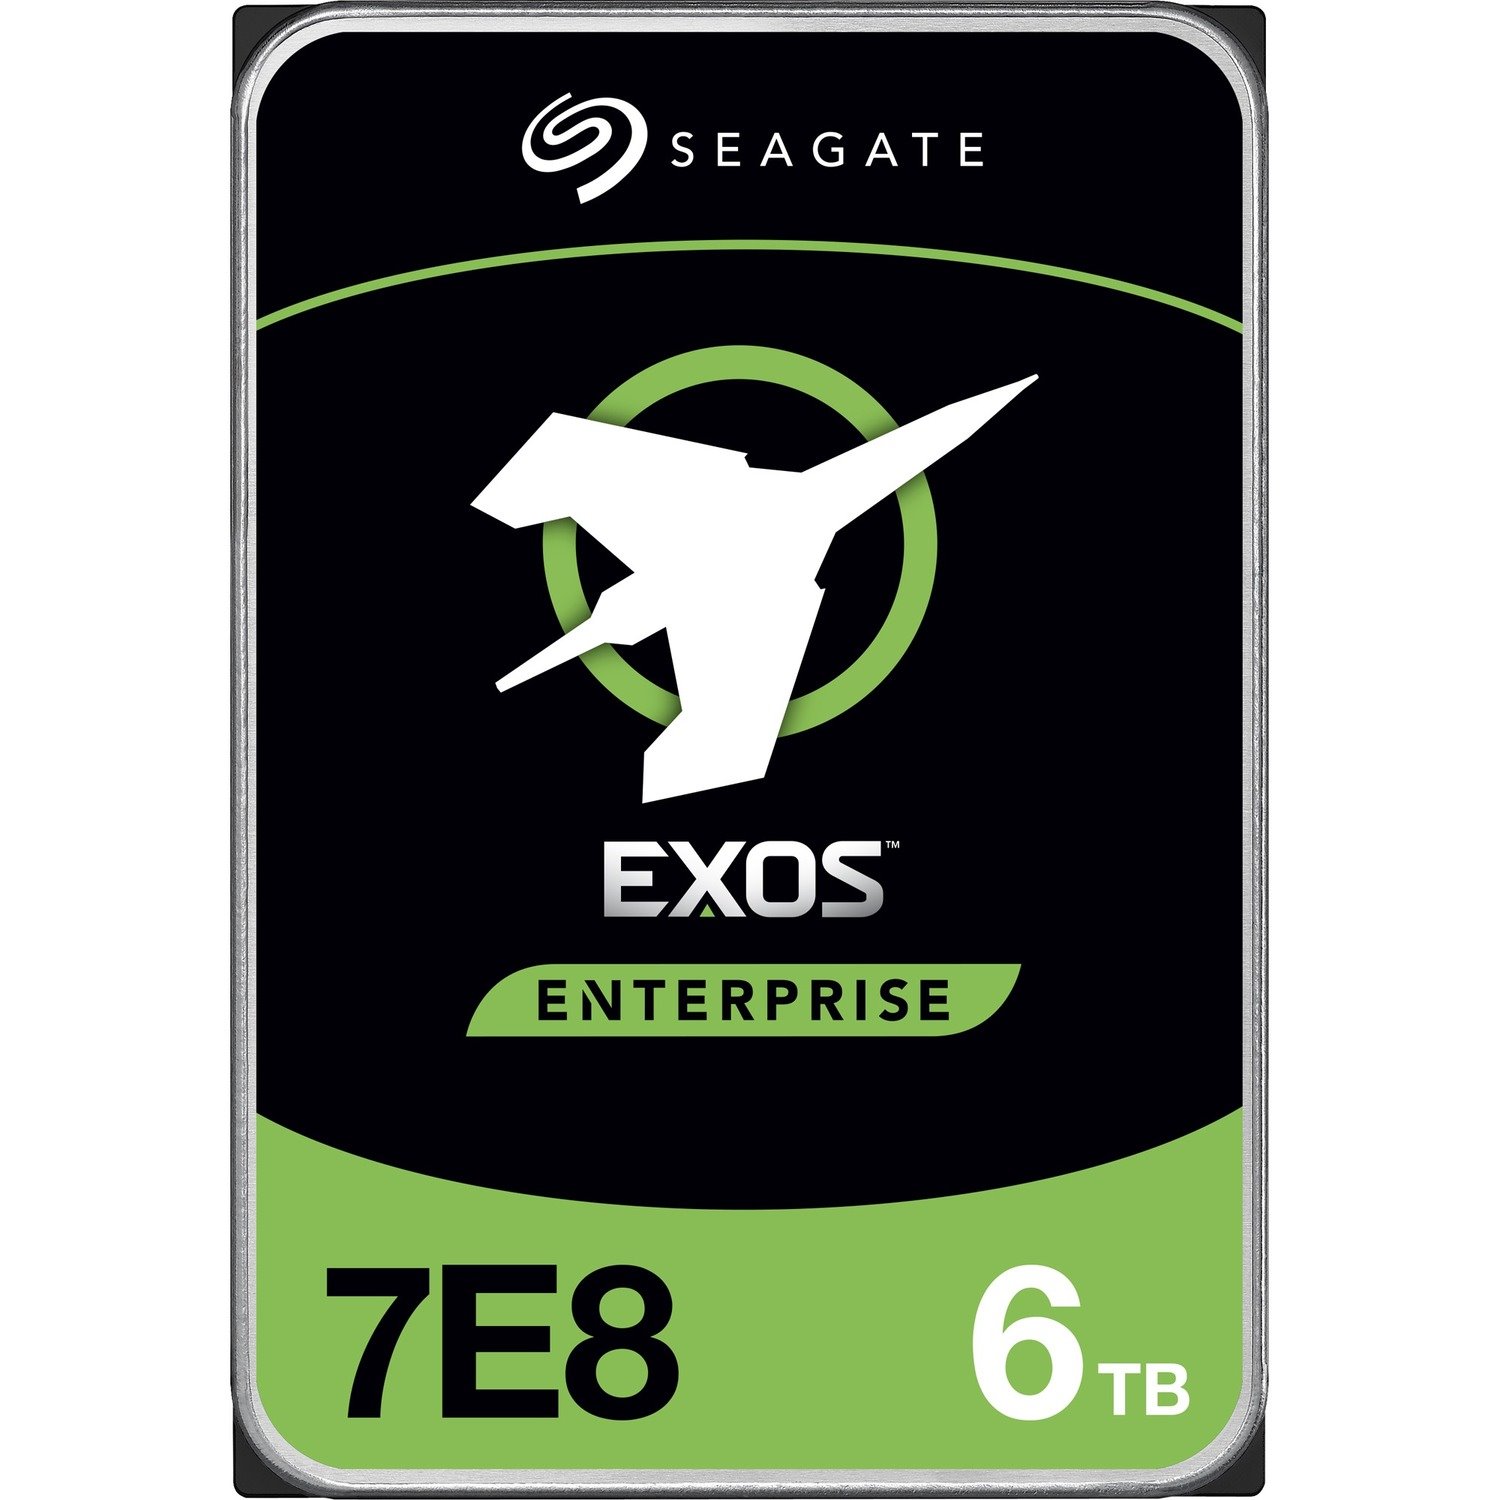 Seagate Exos 7E8 ST6000NM029A 6 TB Hard Drive - Internal - SAS (12Gb/s SAS)